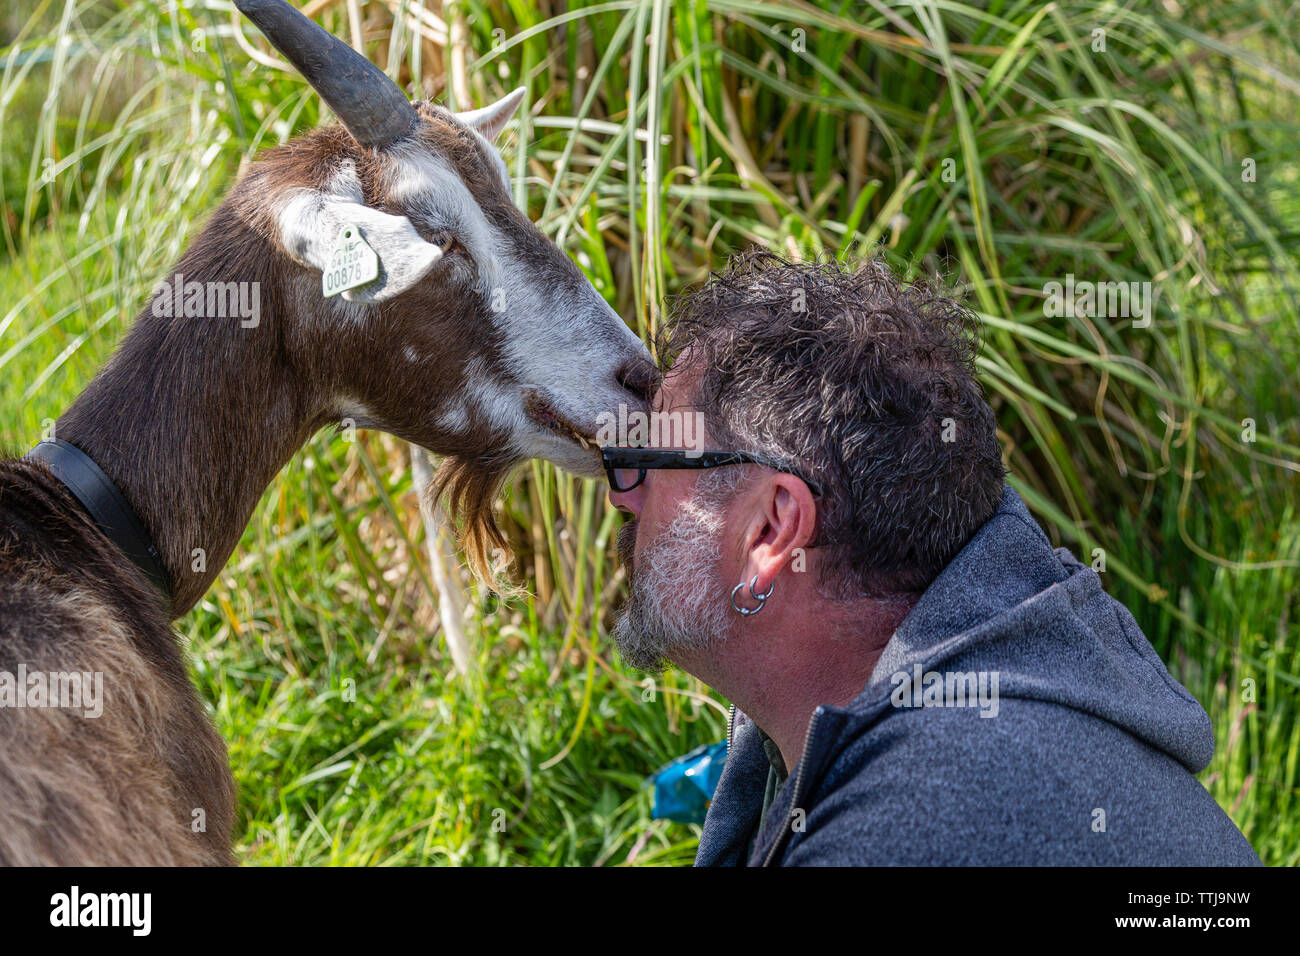 Man with pet goat, County Kerry, Ireland Stock Photo